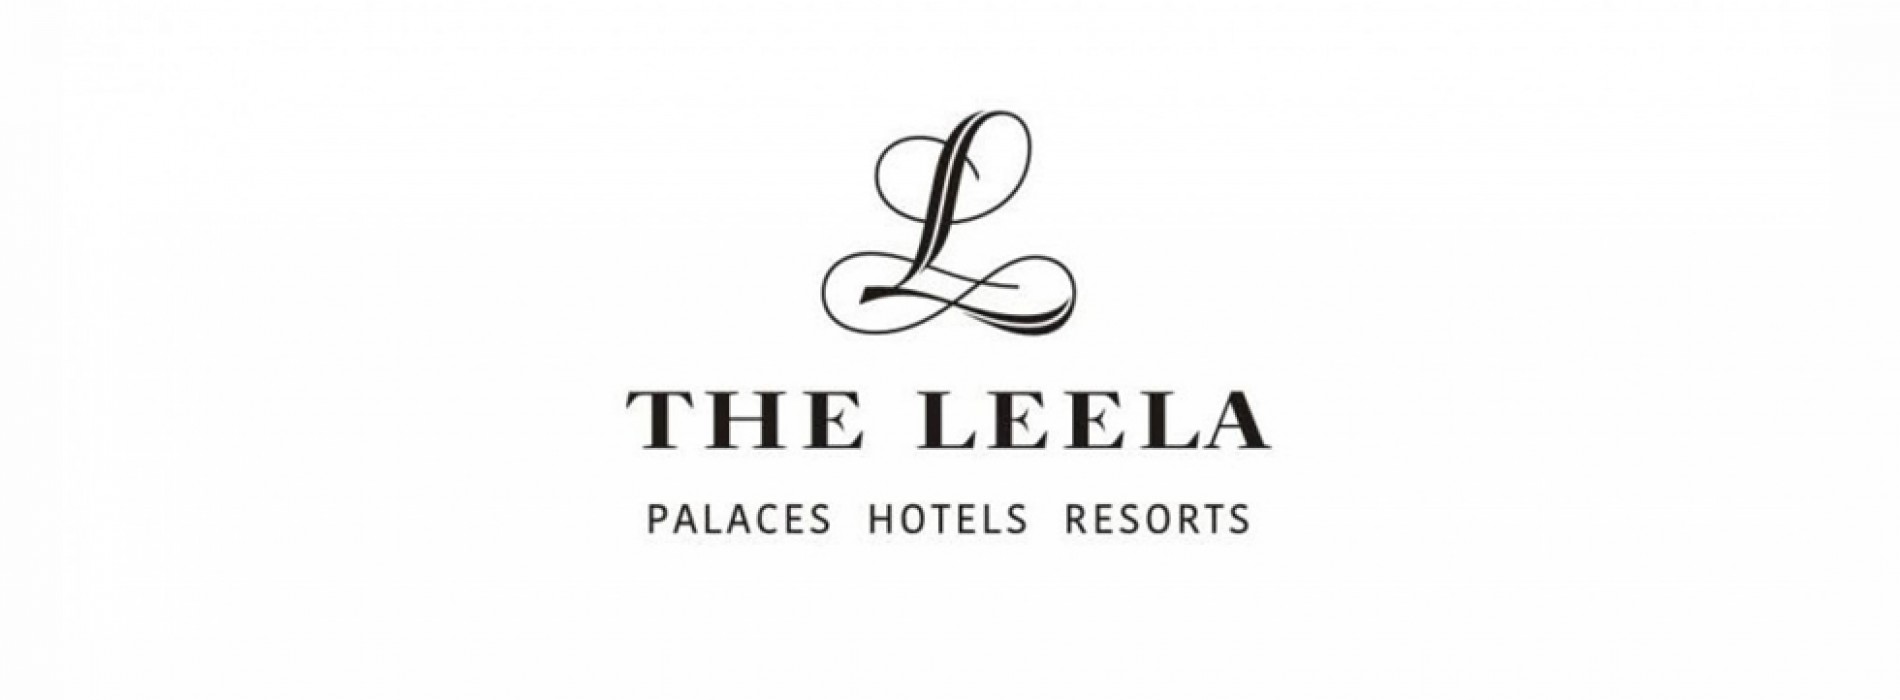 The Leela refutes AAI stand on land lease agreement